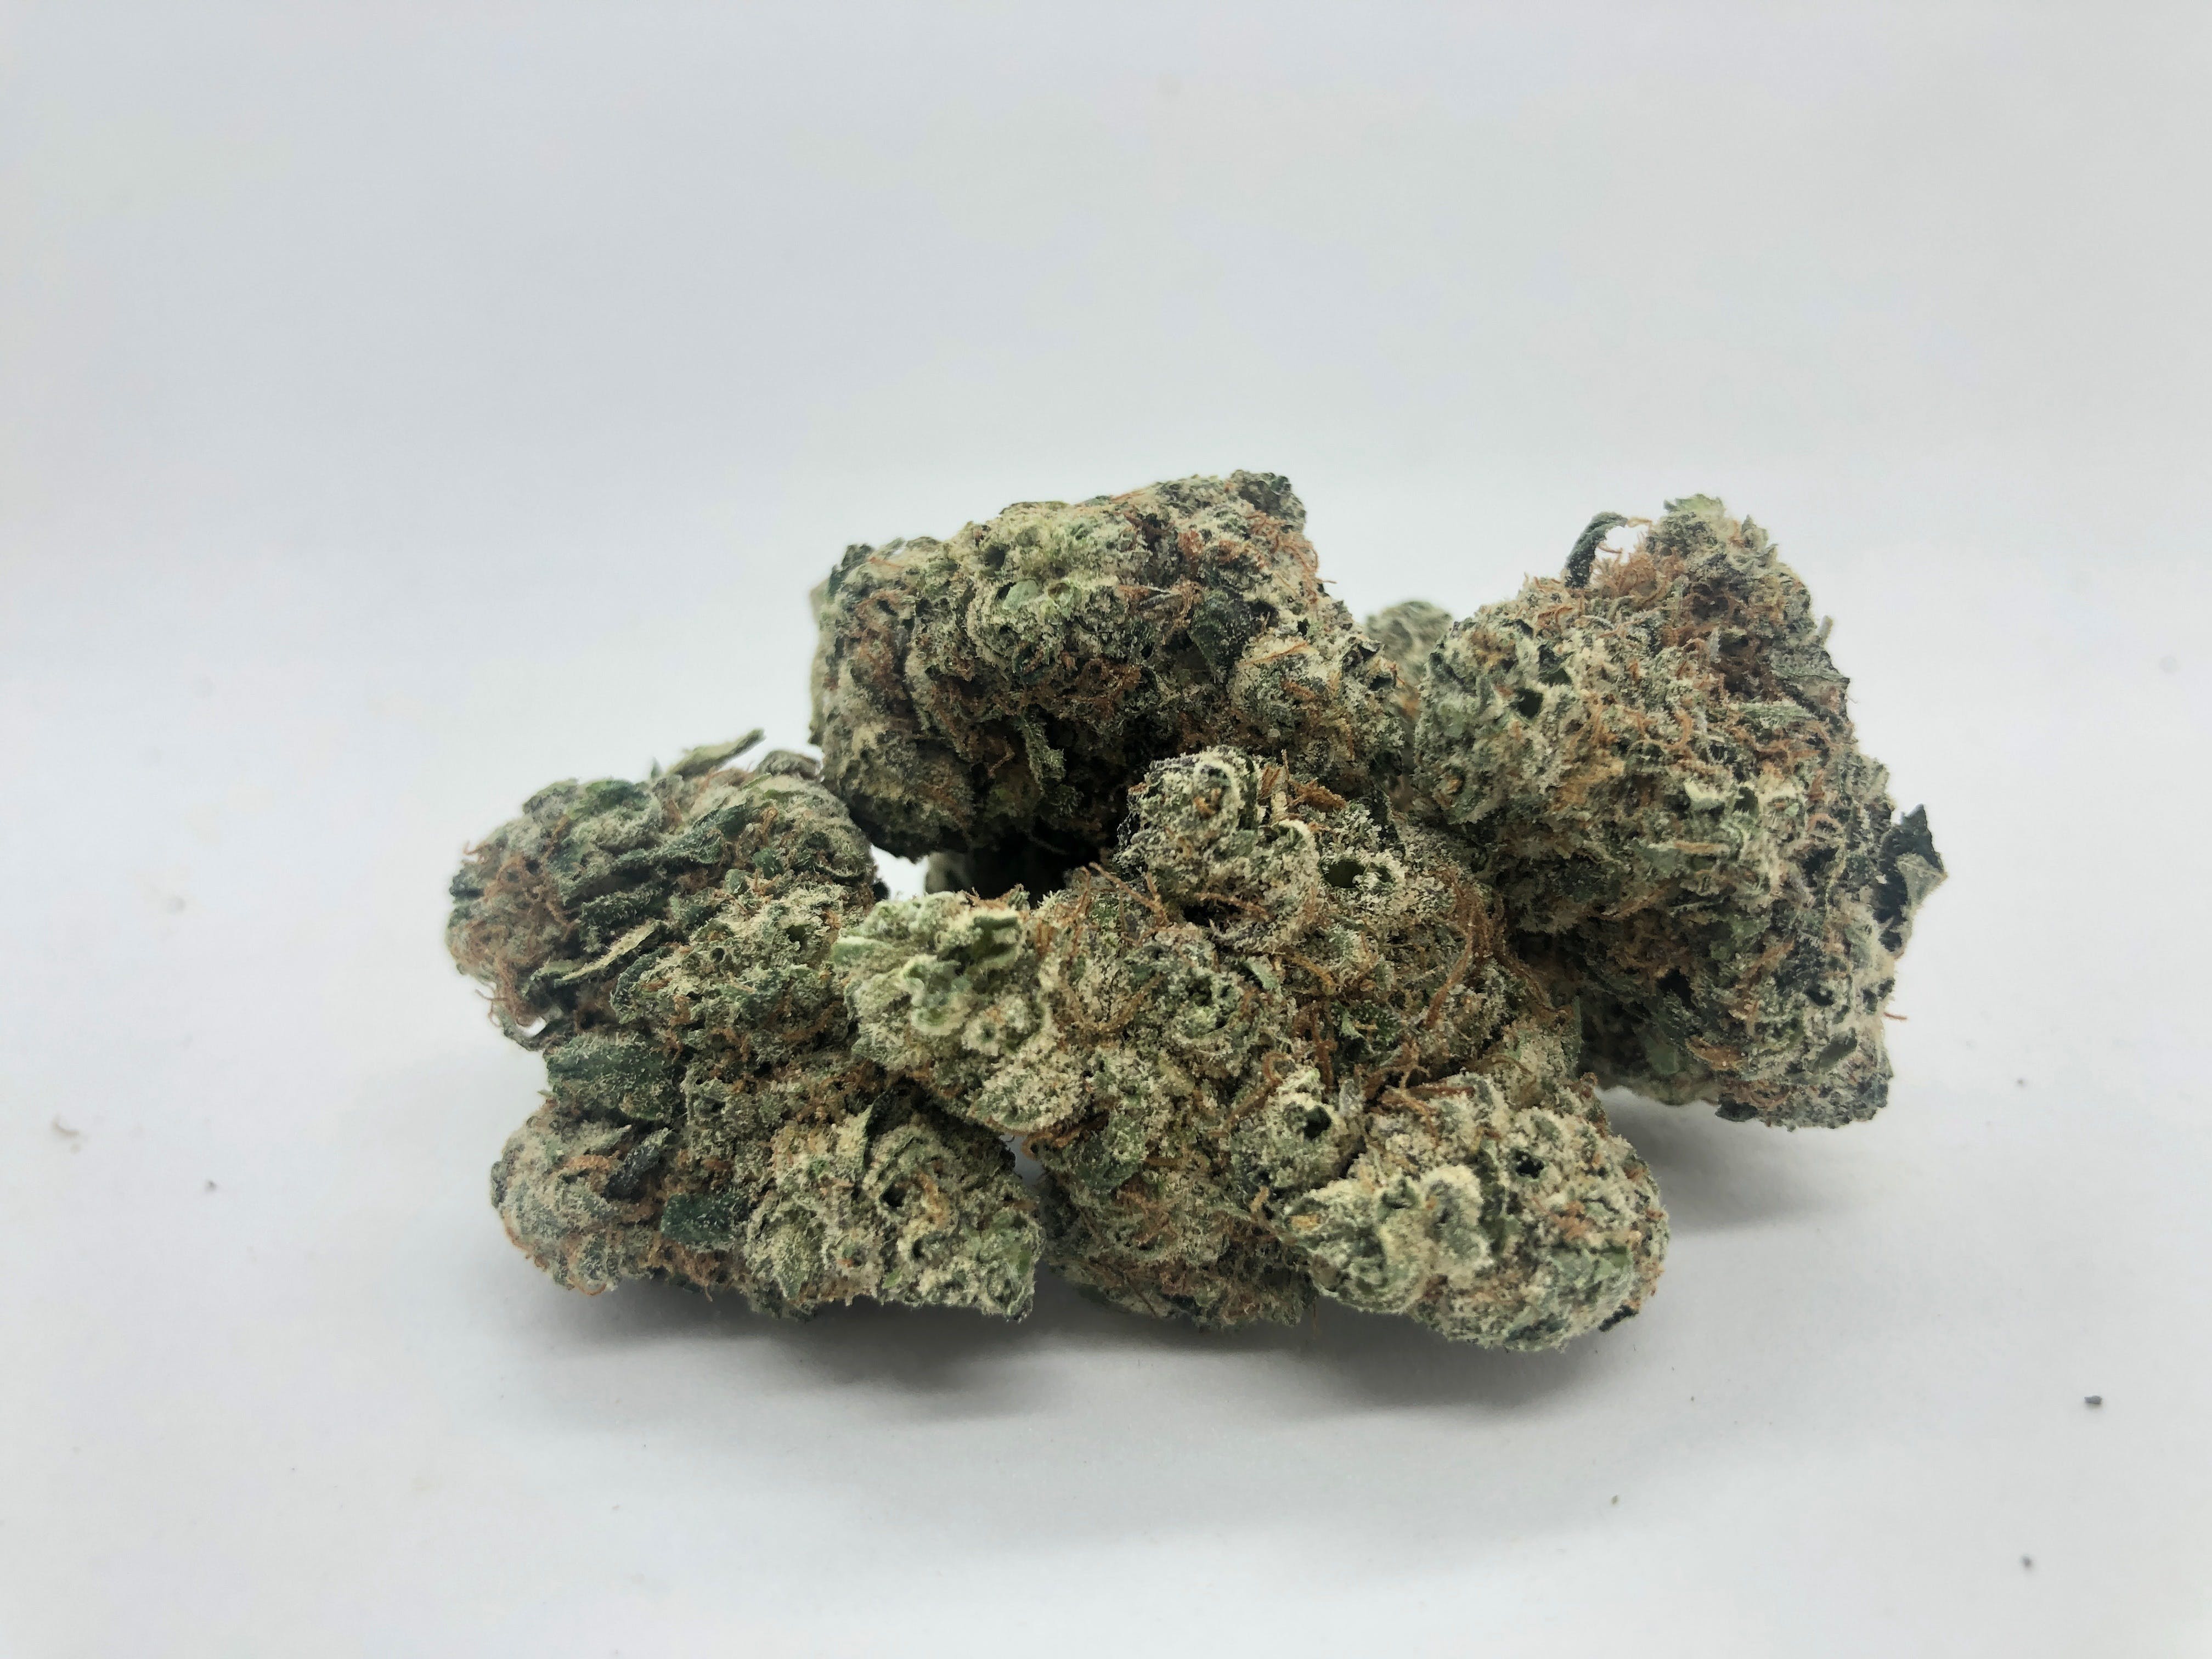 marijuana-dispensaries-11034-s-inglewood-ave-unit-10-inglewood-exclusive-bio-diesel